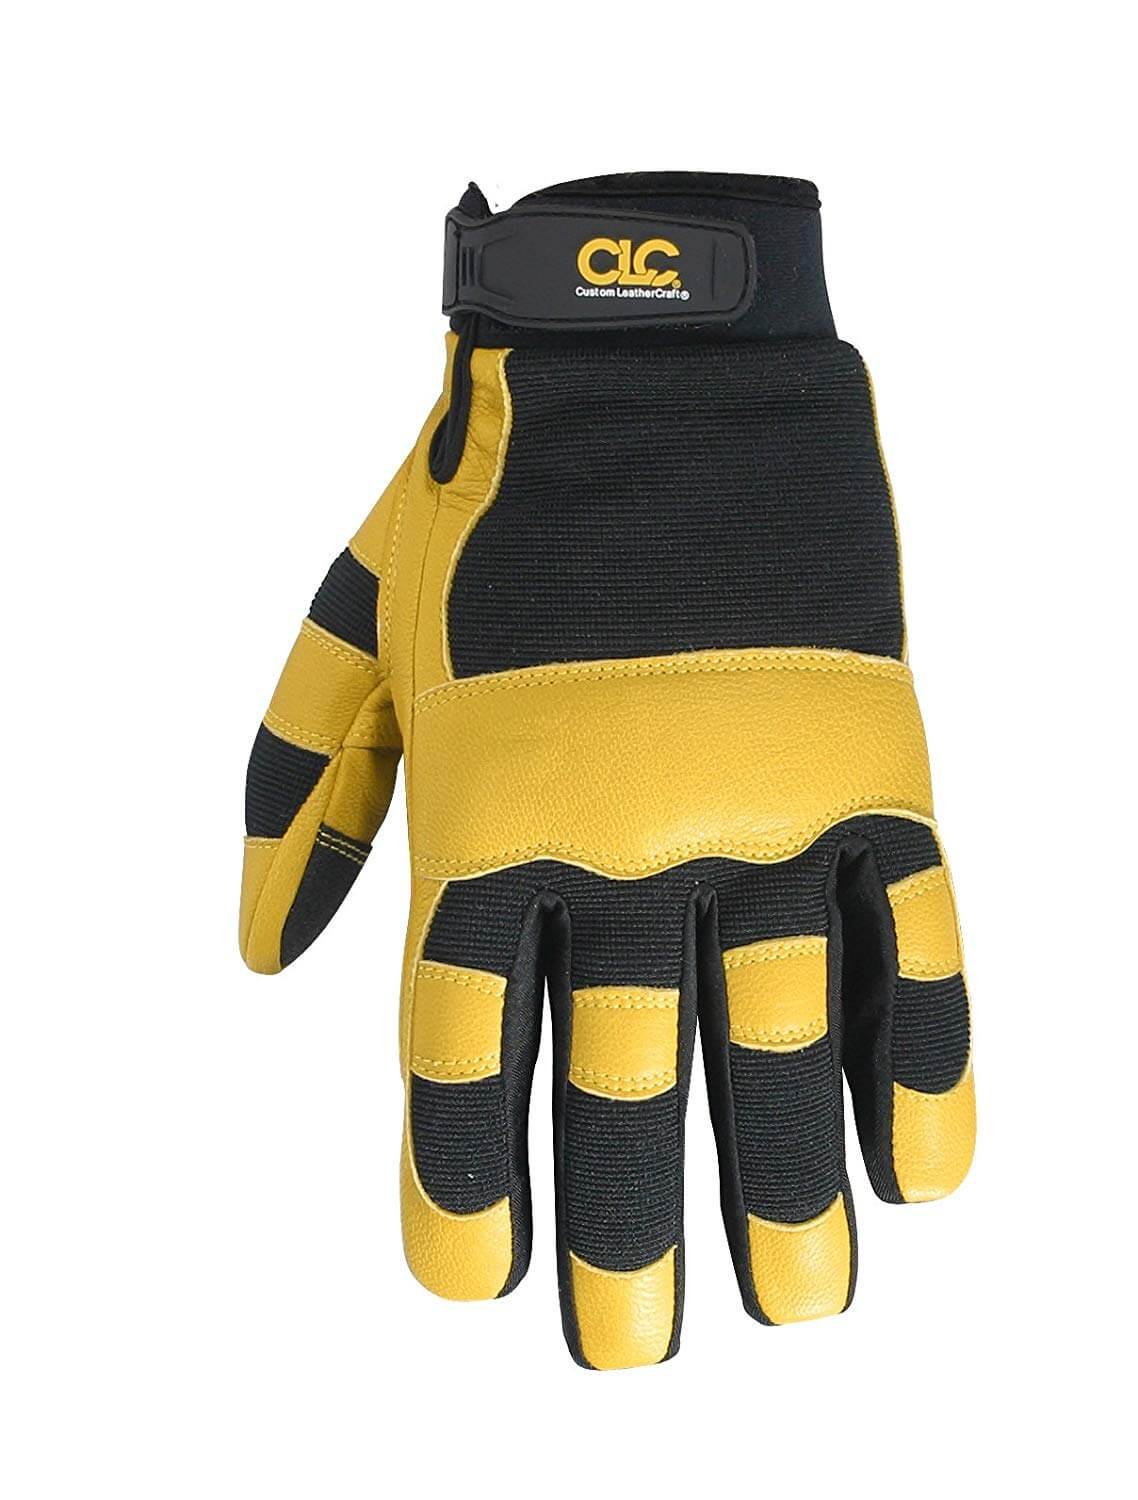 CLC Goatskin Work Gloves - XLarge